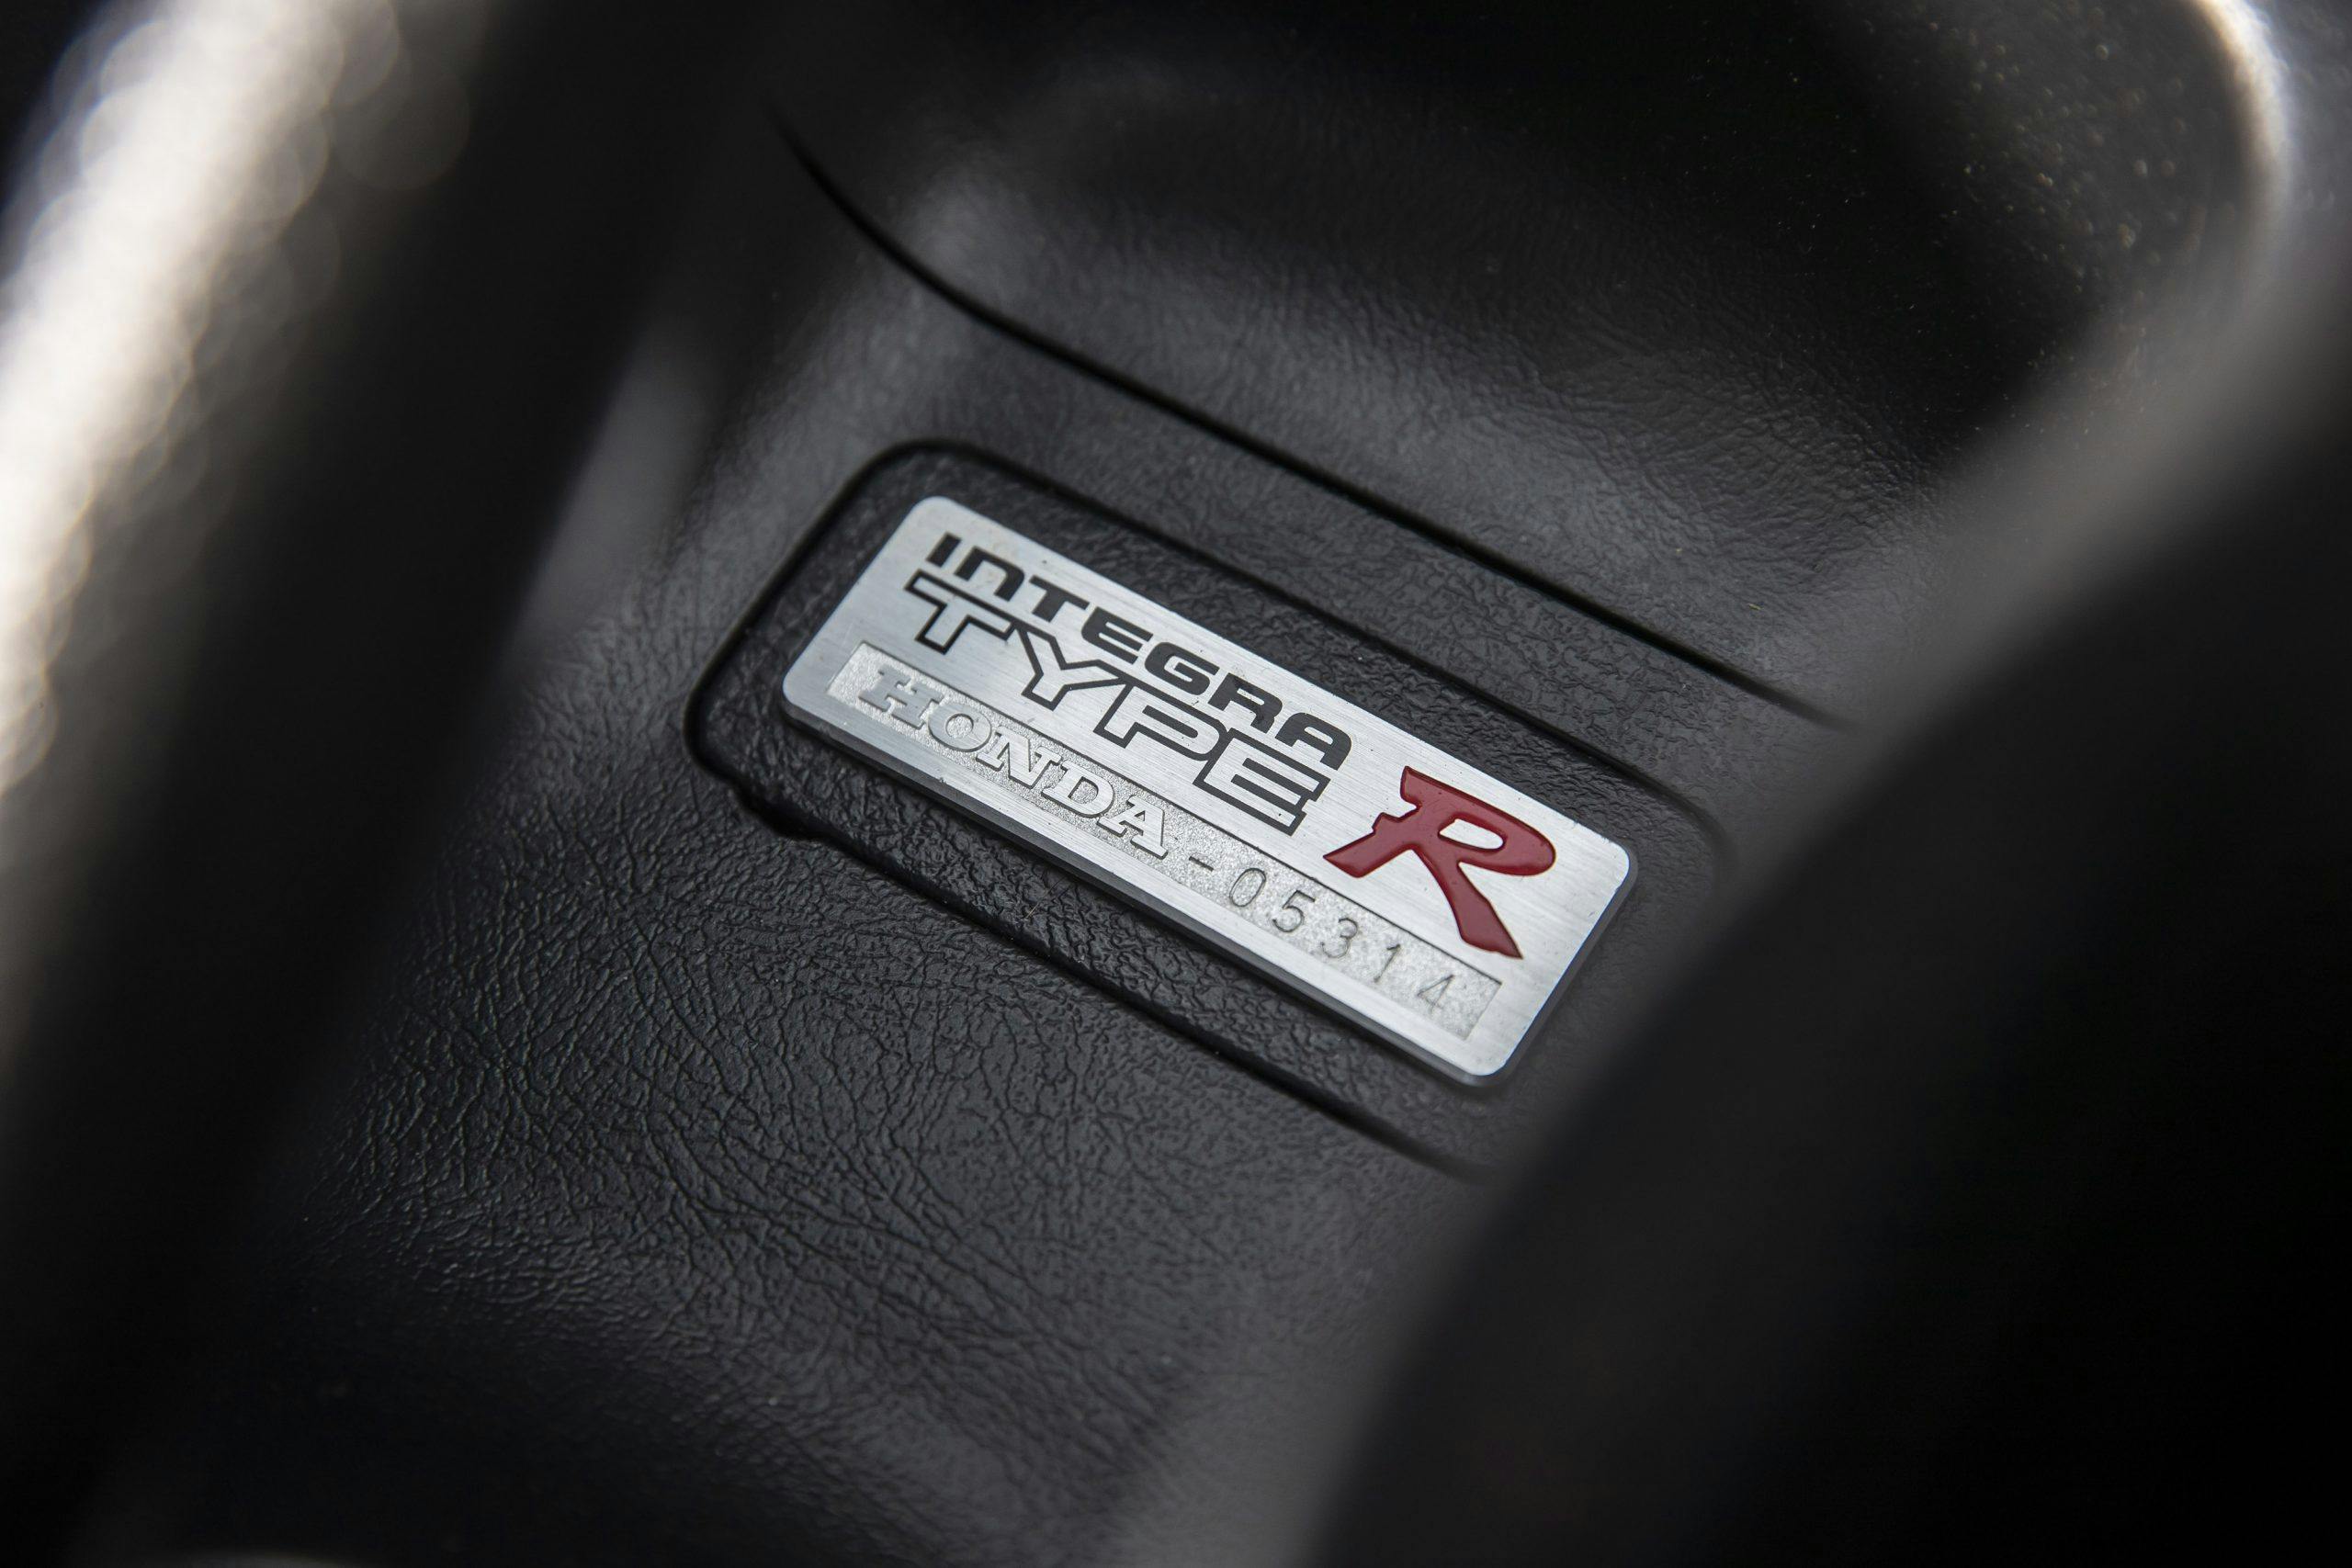 Honda Integra Type-R plate